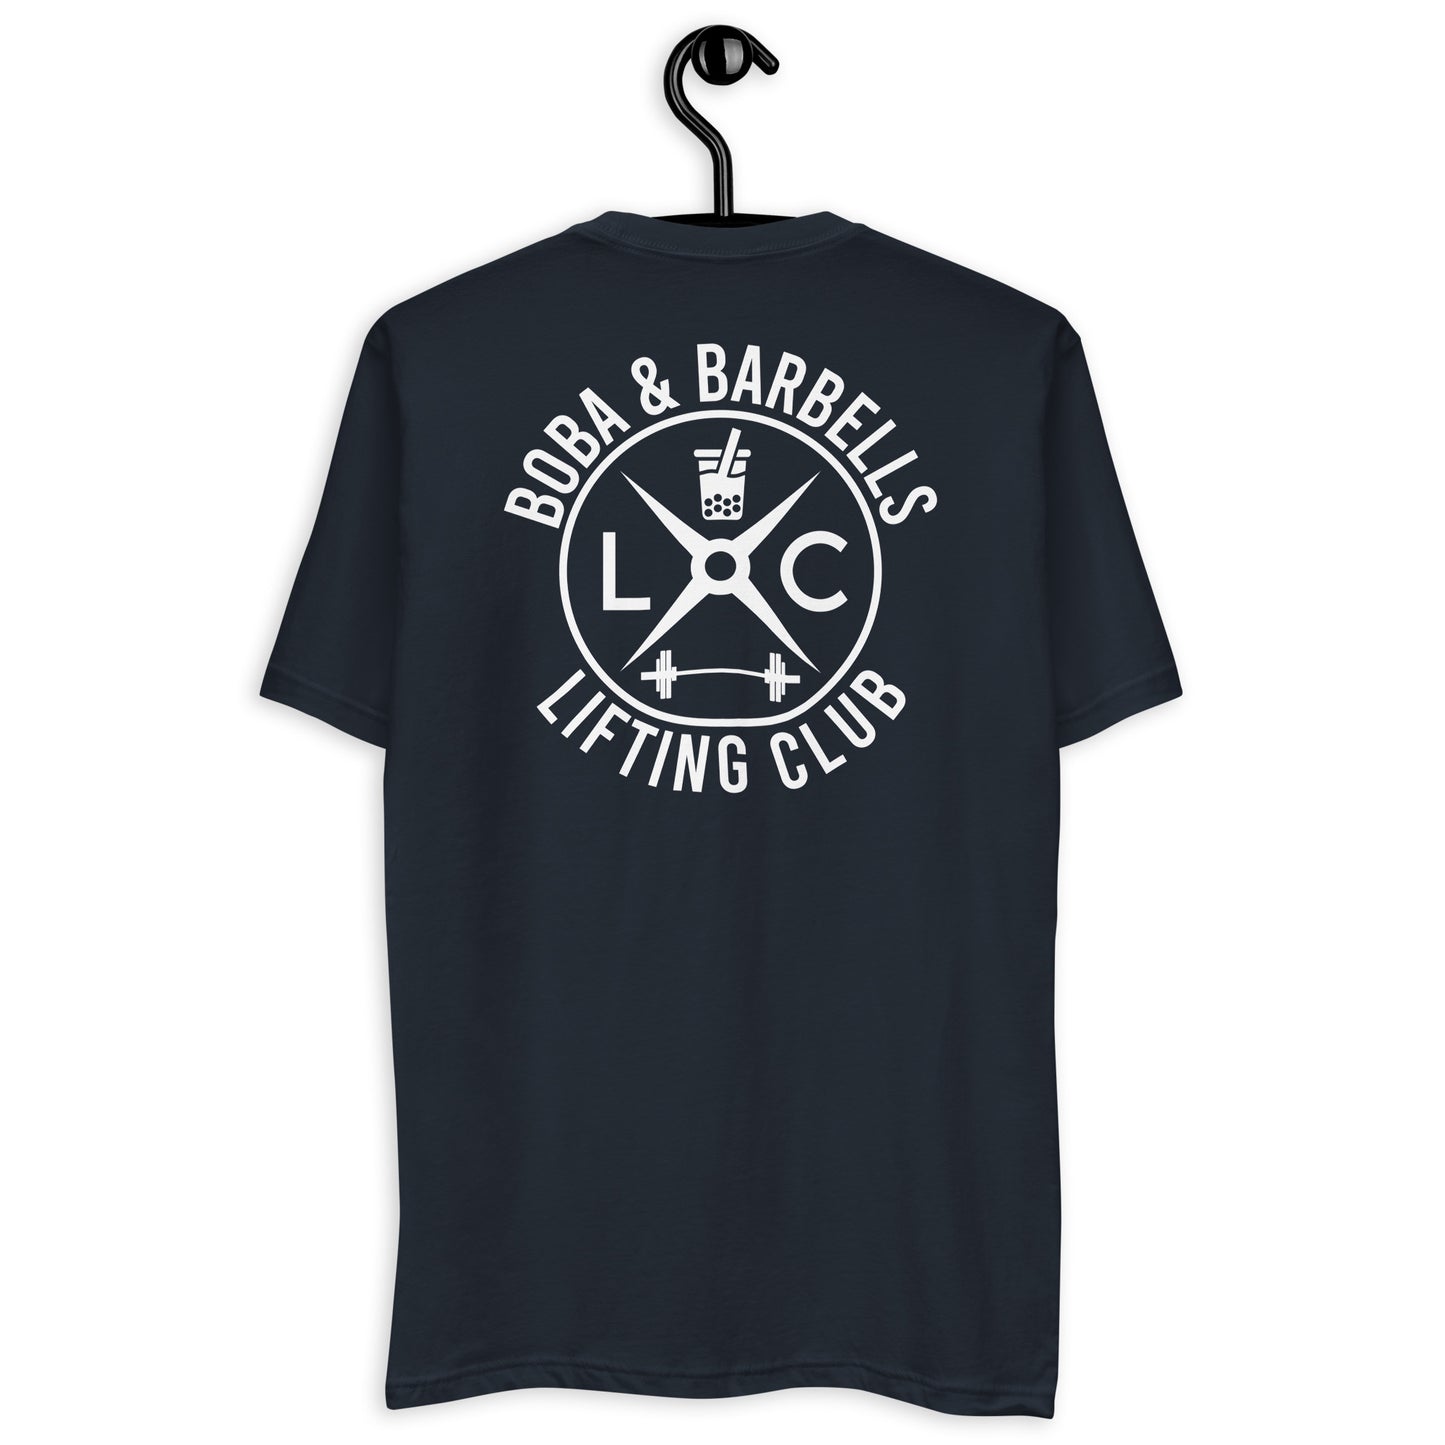 Men's Boba and Barbells Lifting Club Short Sleeve T-Shirt